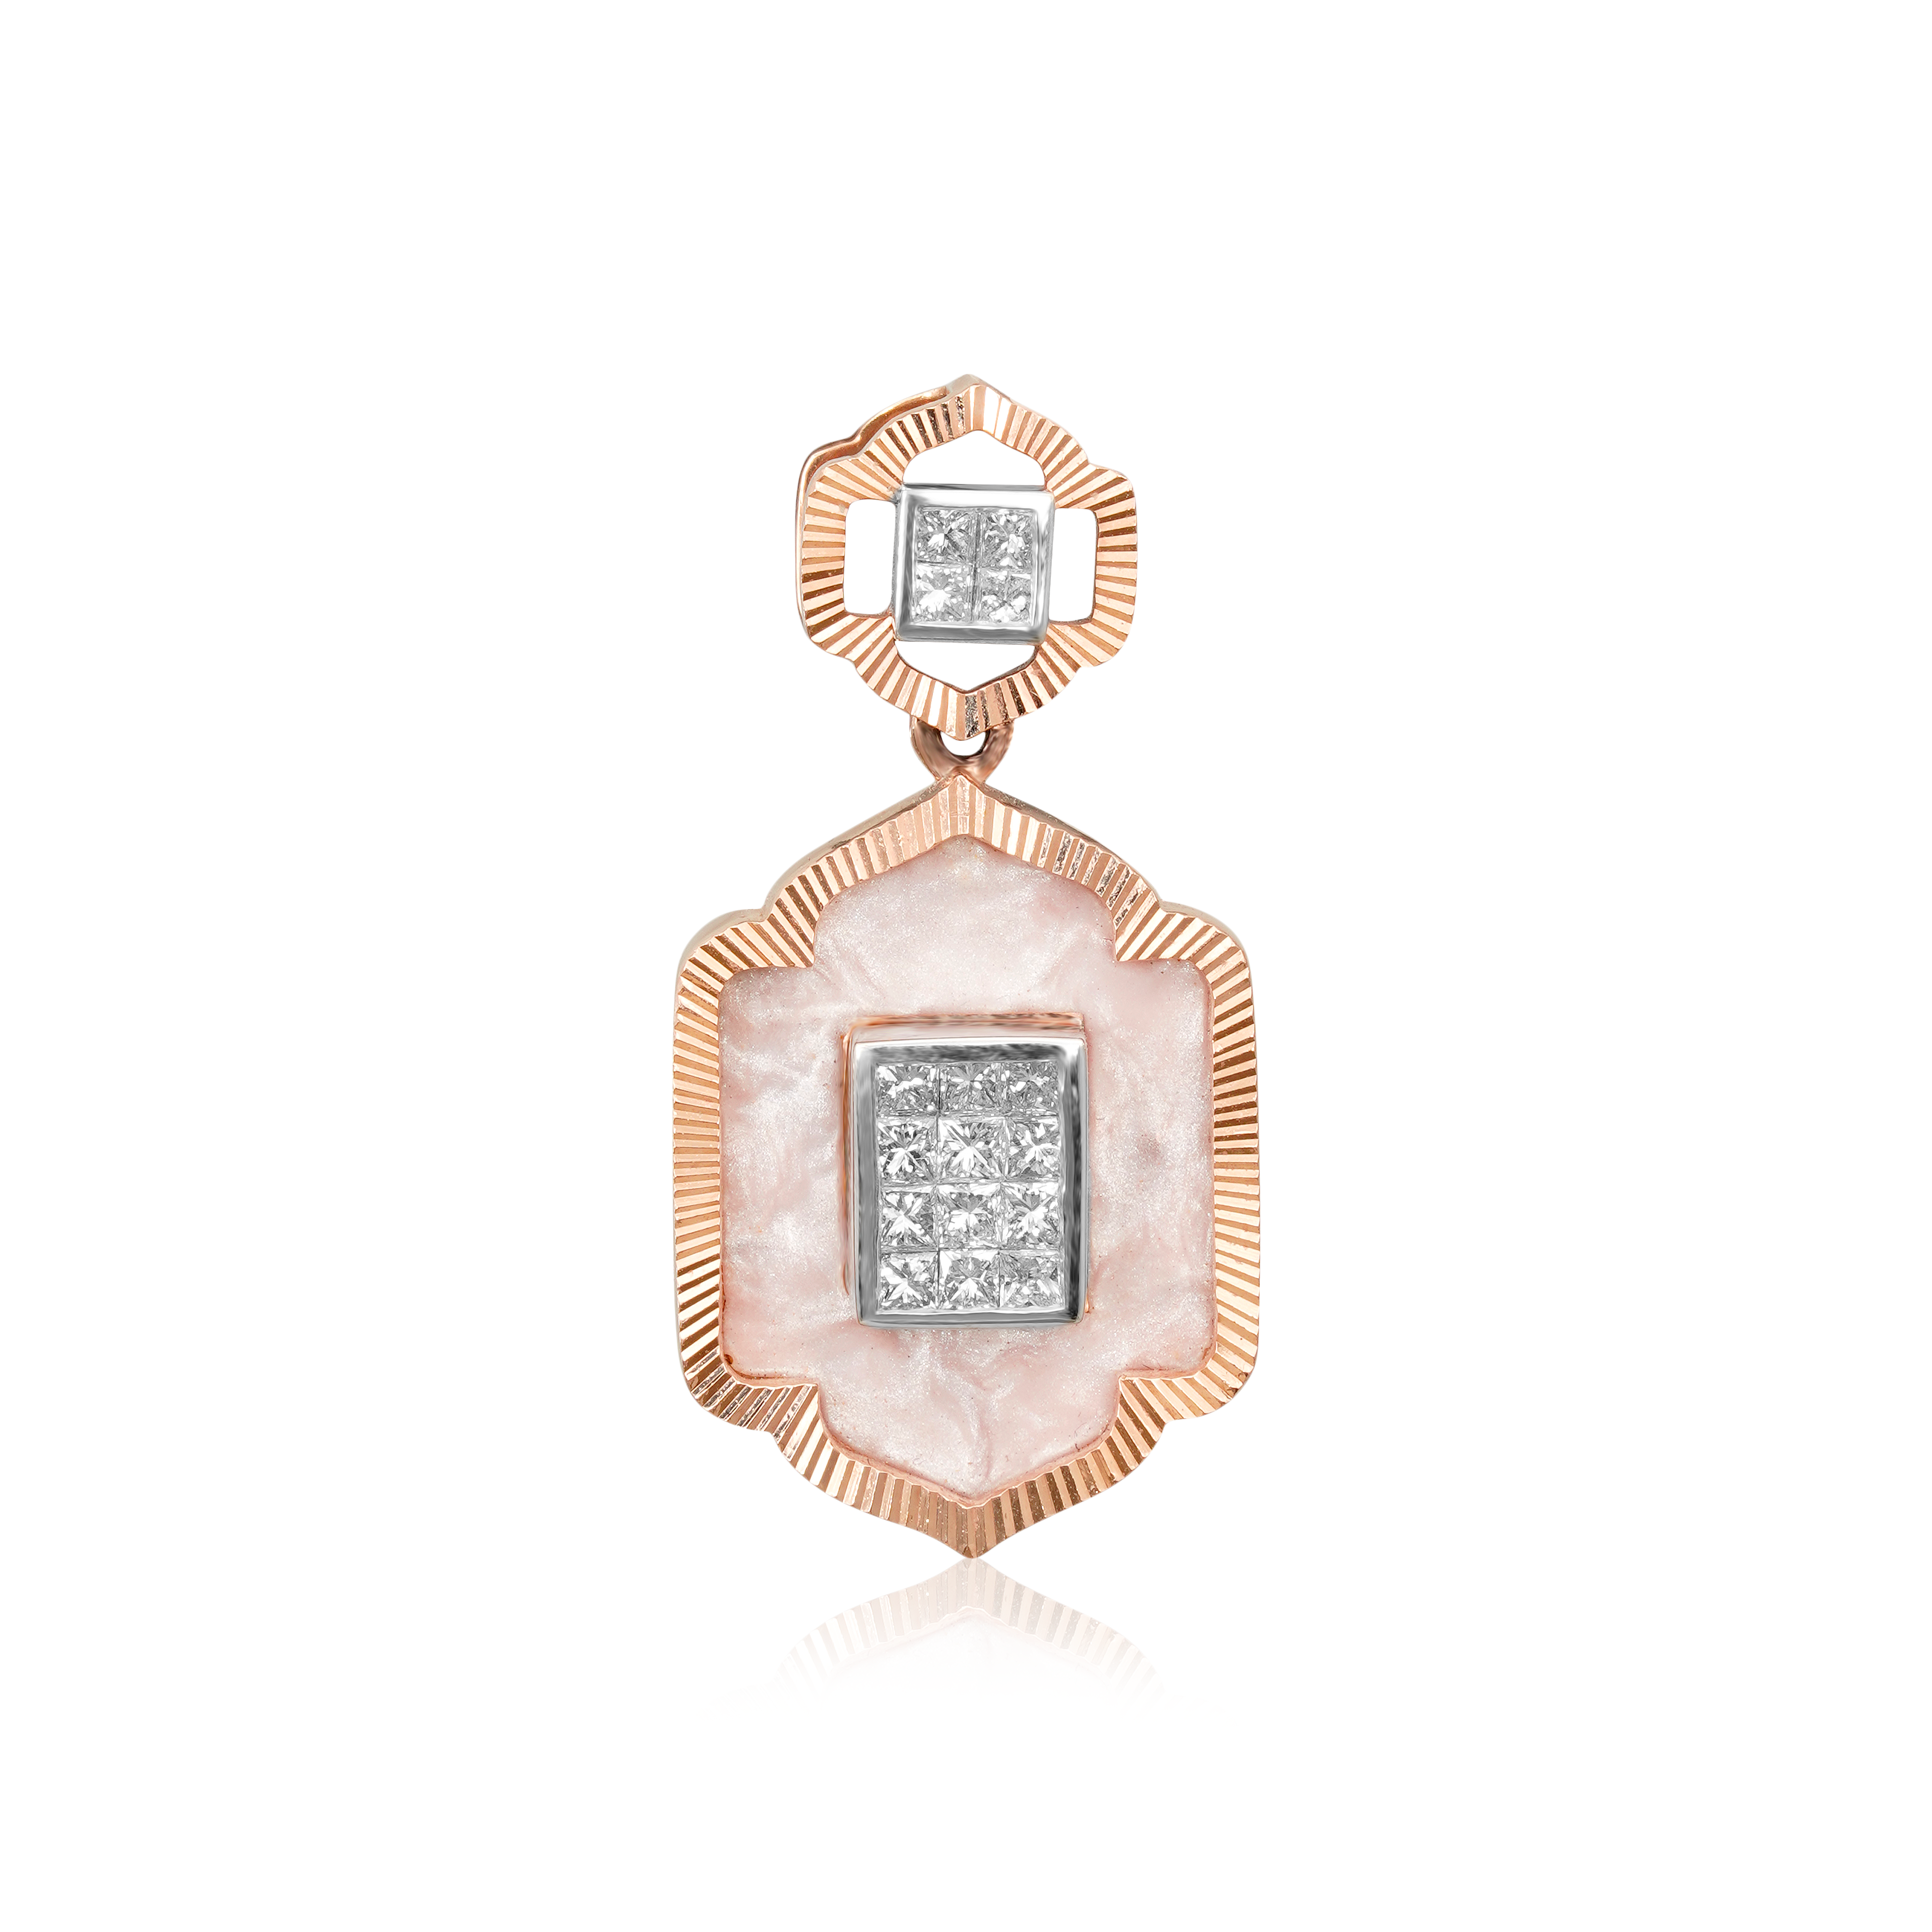 Cleadon Diamond pendant